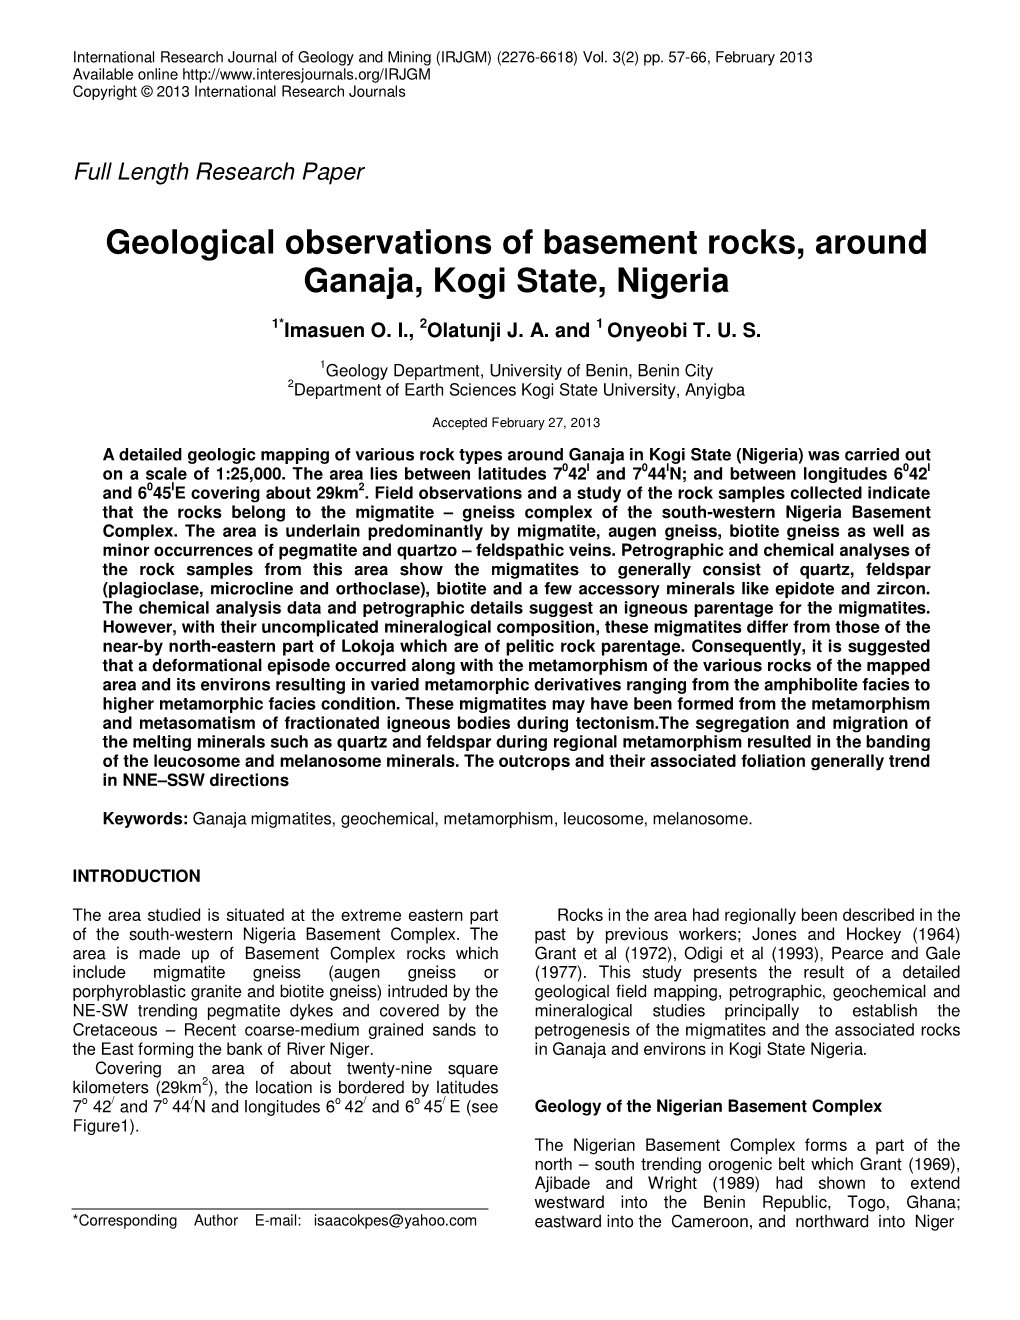 Geological Observations of Basement Rocks, Around Ganaja, Kogi State, Nigeria